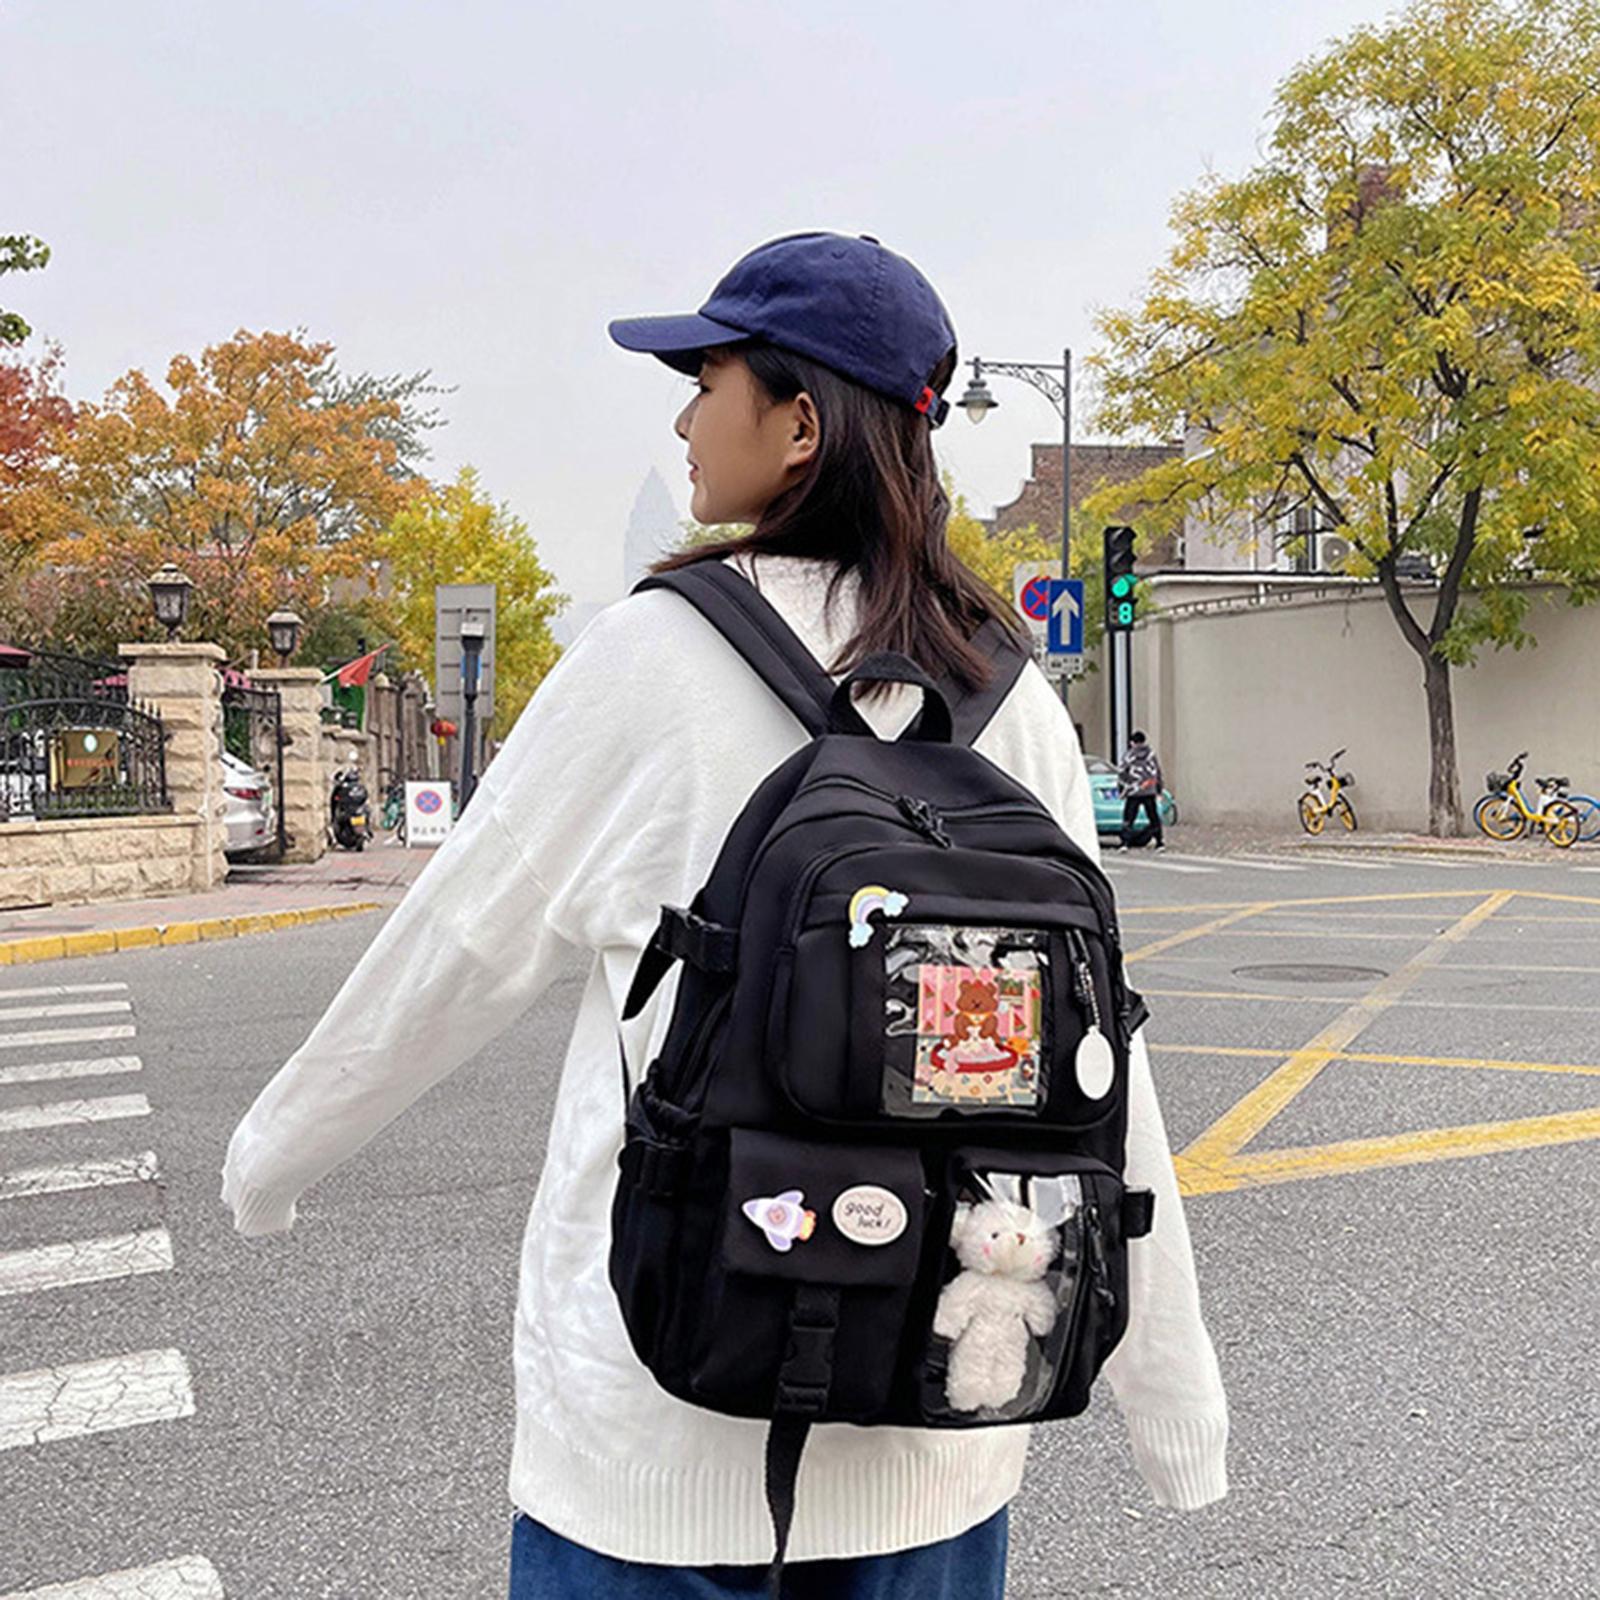 Laptop Backpacks School Bag College Theftproof Travel Daypack Large Bookbags for Teens Girls Women Students